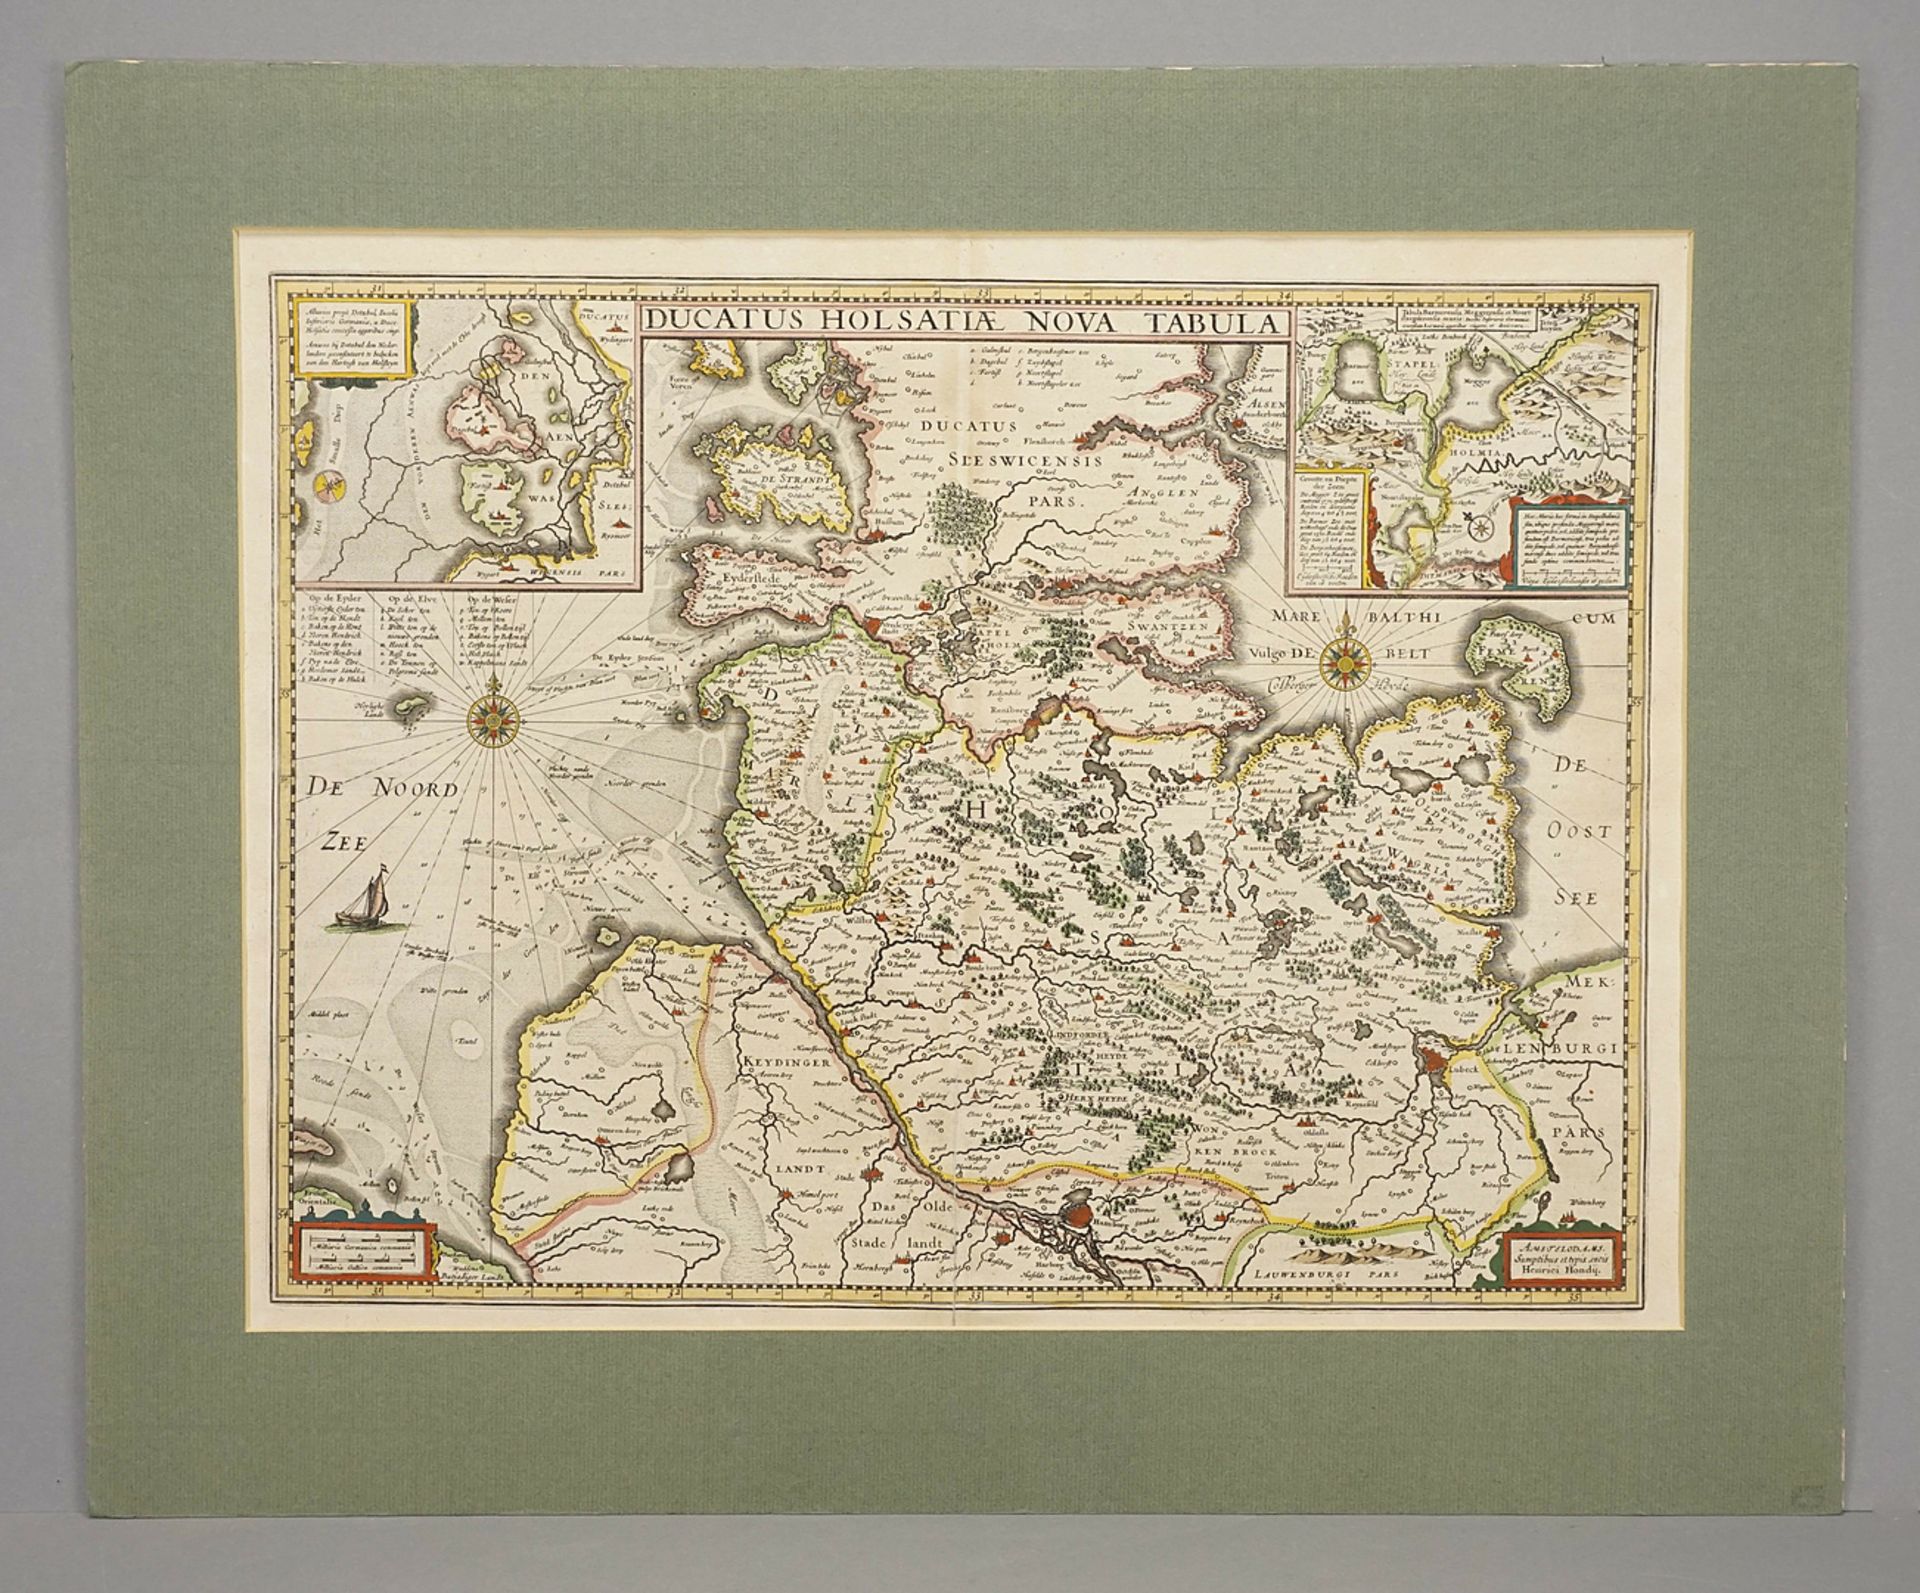 Henricus Hondius (1597-1651), "Ducatus Holsatiae nova tabula" (New Map of the Duchy of Holstein) - Image 2 of 4